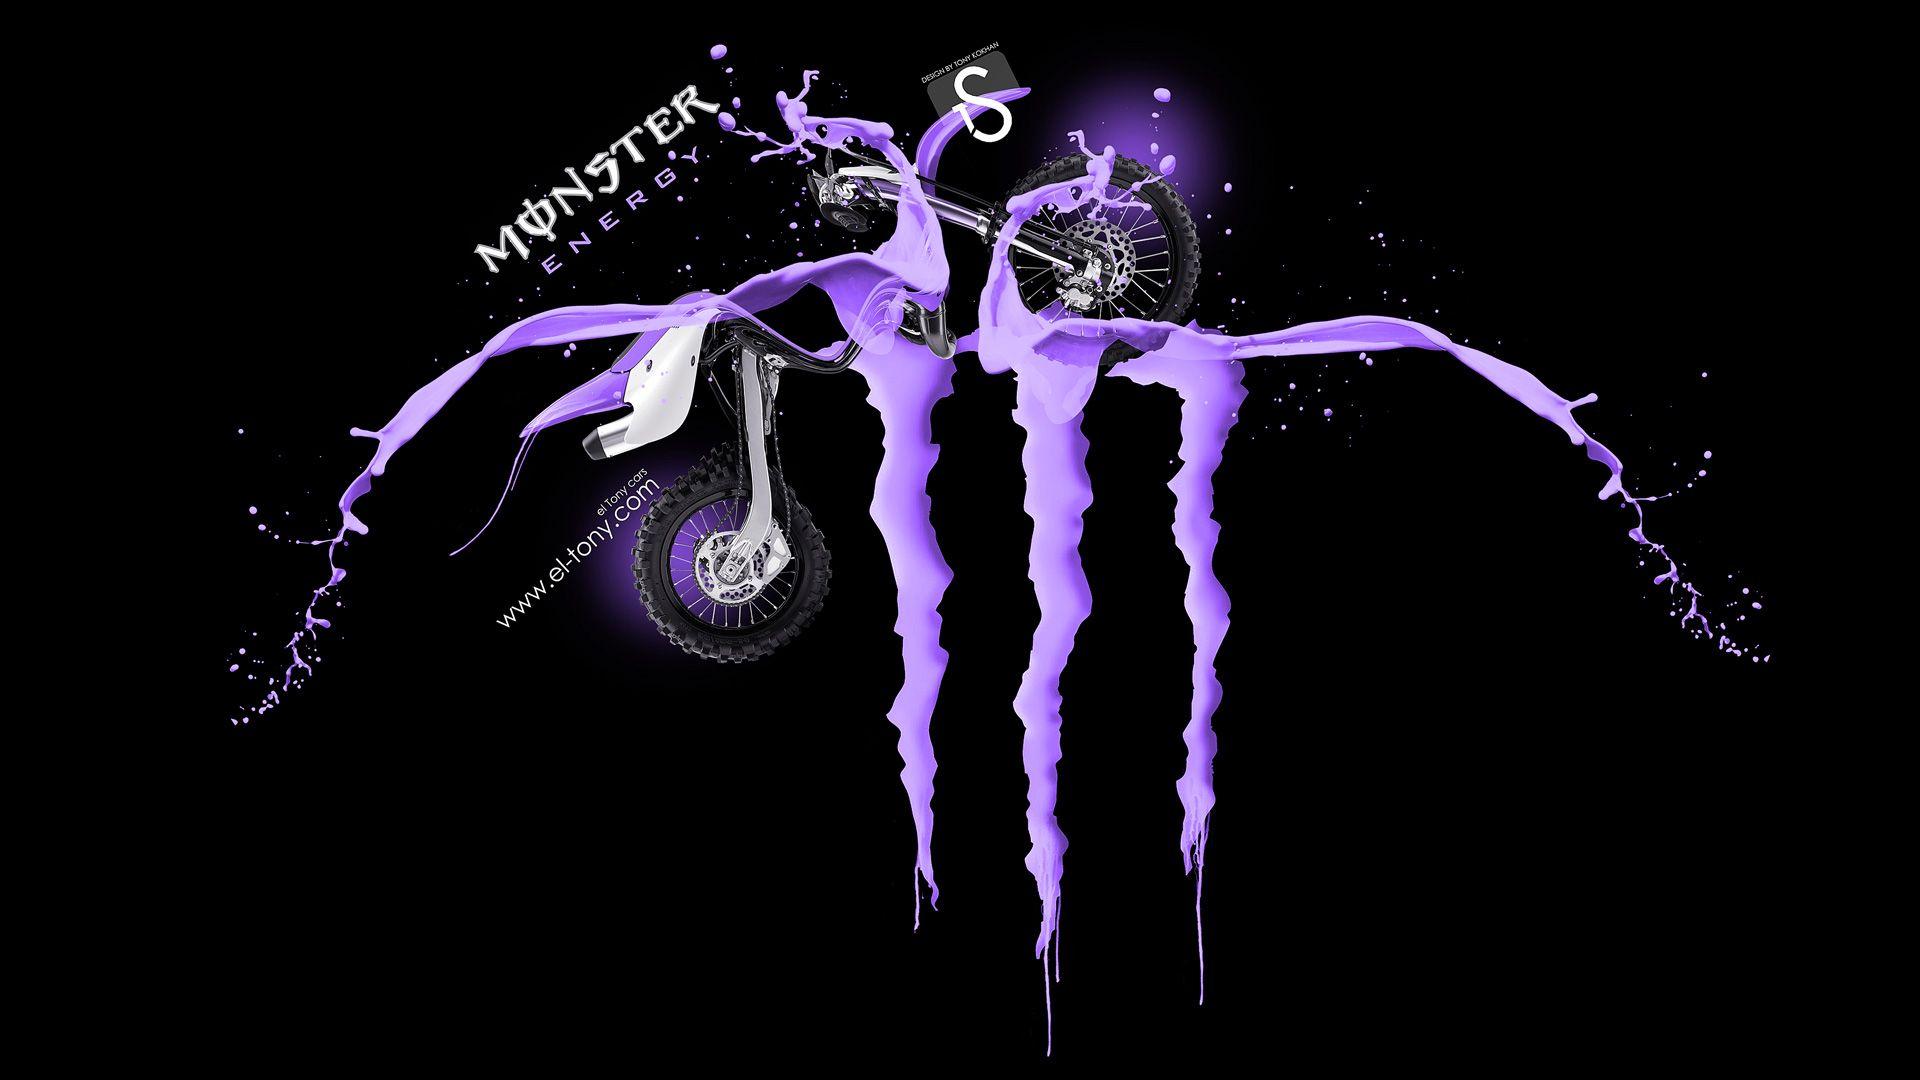 Cool Monster Logo - Monster Energy Logo Acid Kawasaki 2013 | el Tony